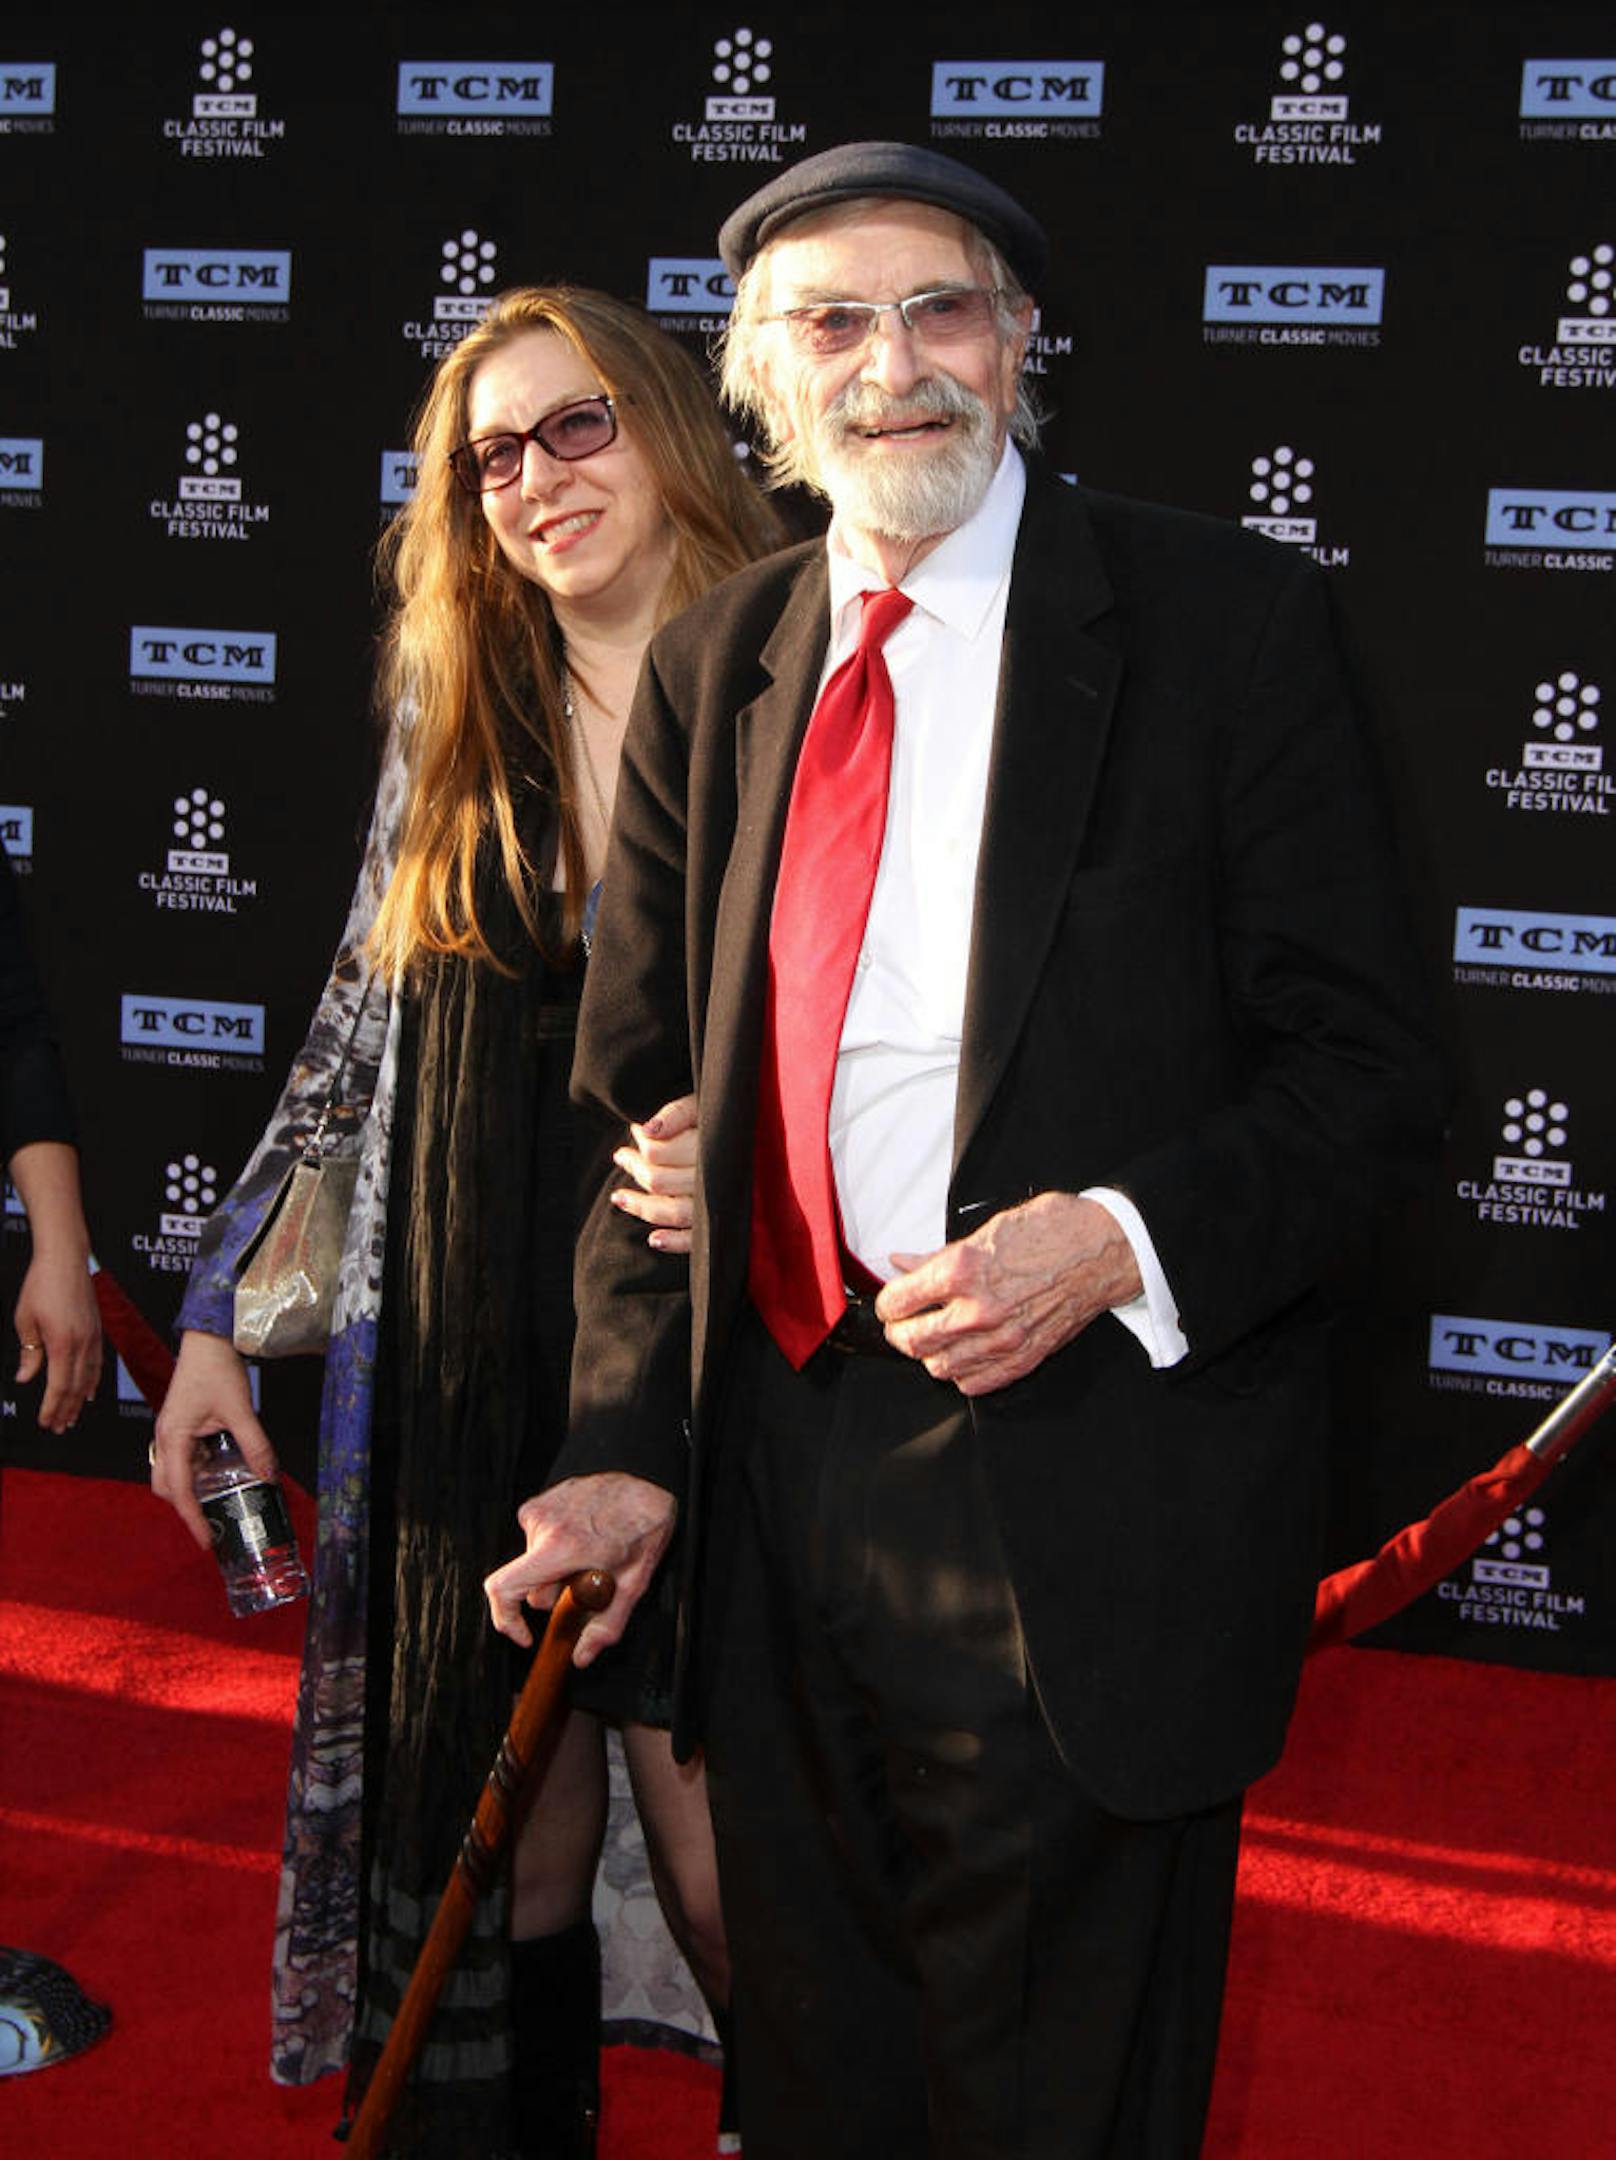 Martin Landau mit seiner Tochter Susan Landau Finch, 2017 beim TCM Classic Film Festival.